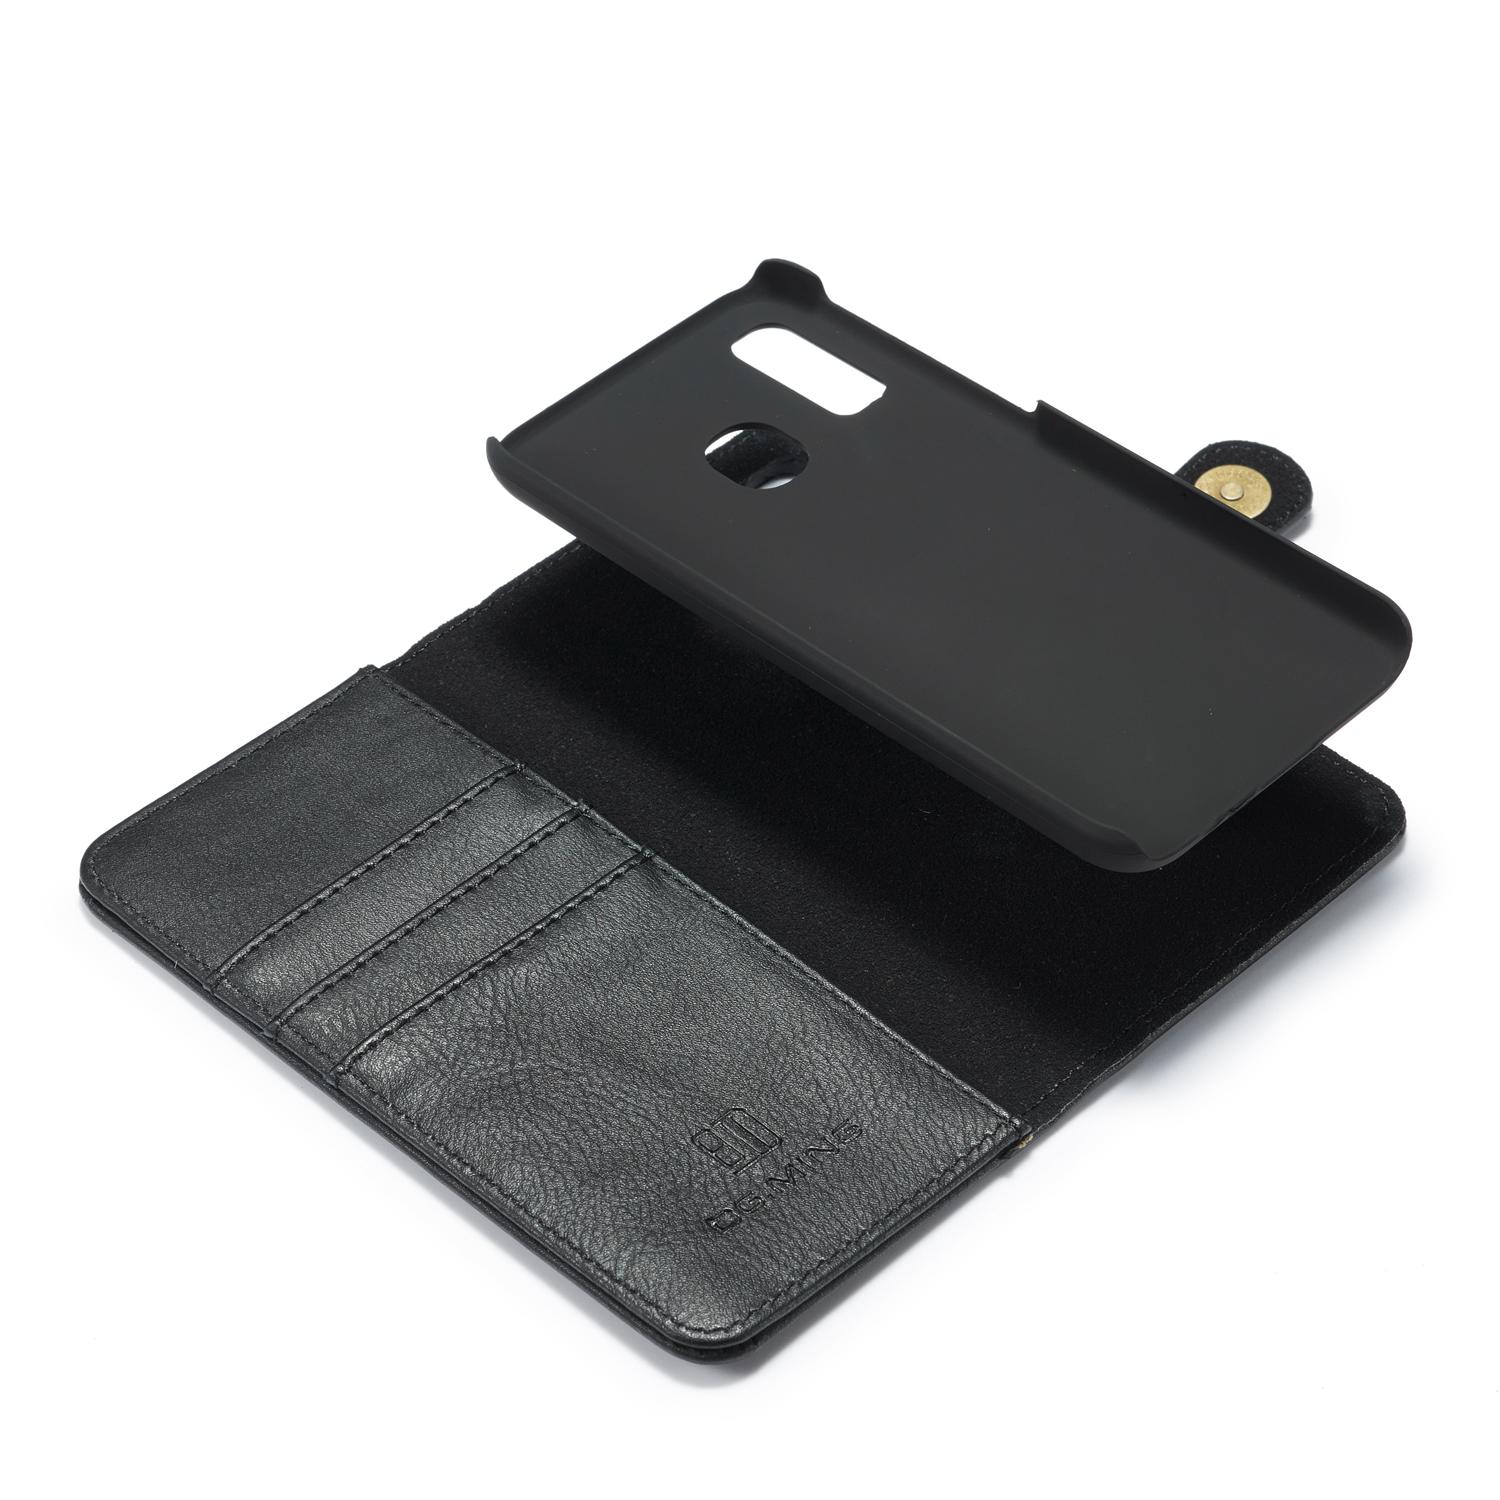 Samsung Galaxy A40 Magnet Wallet Black